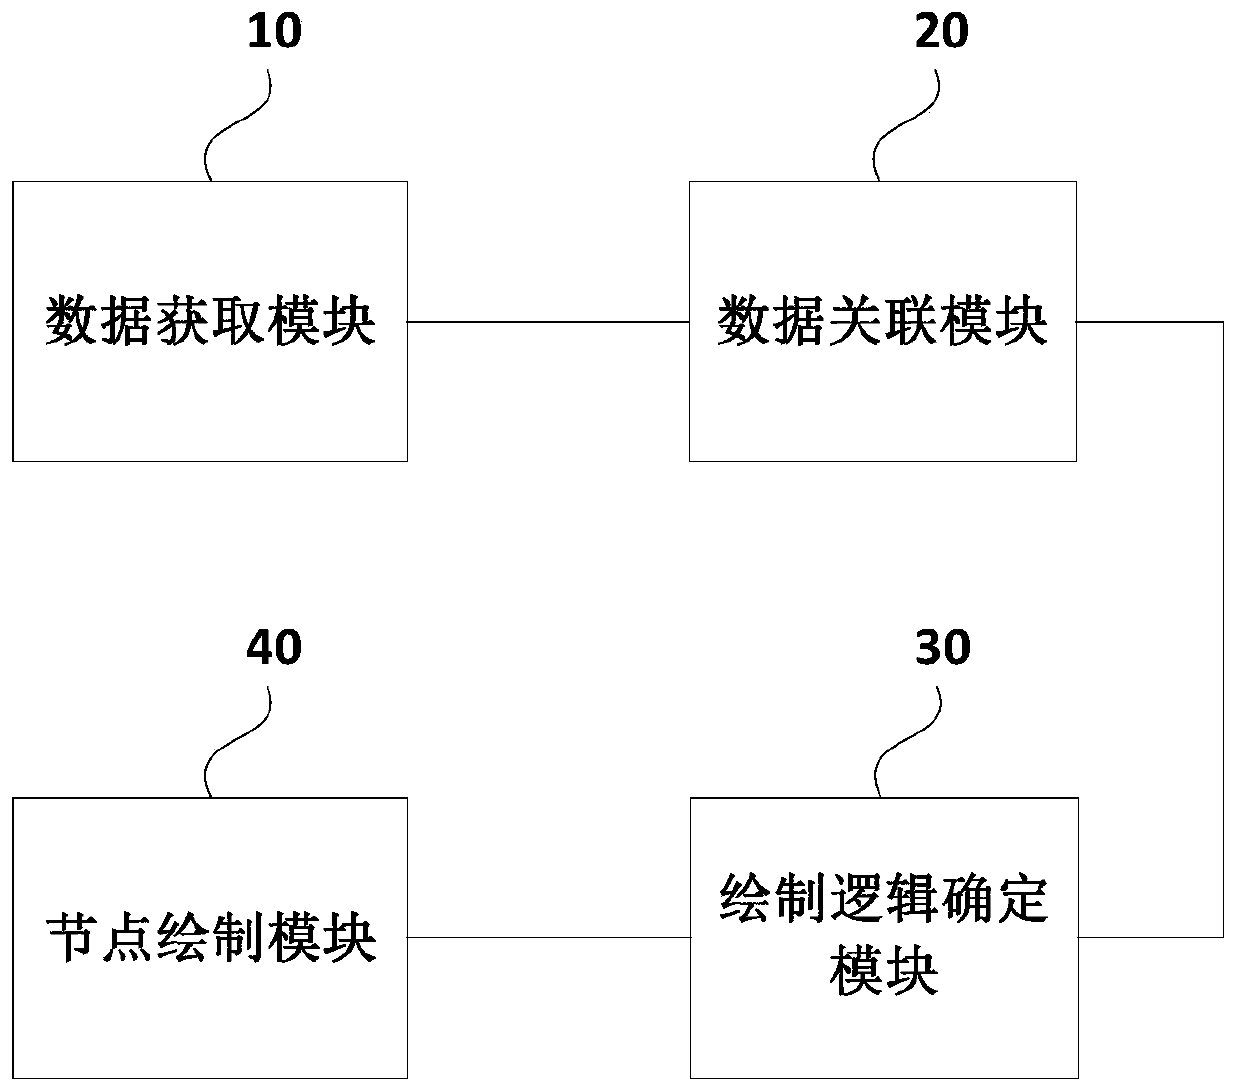 Tree diagram rendering method and device, equipment and medium